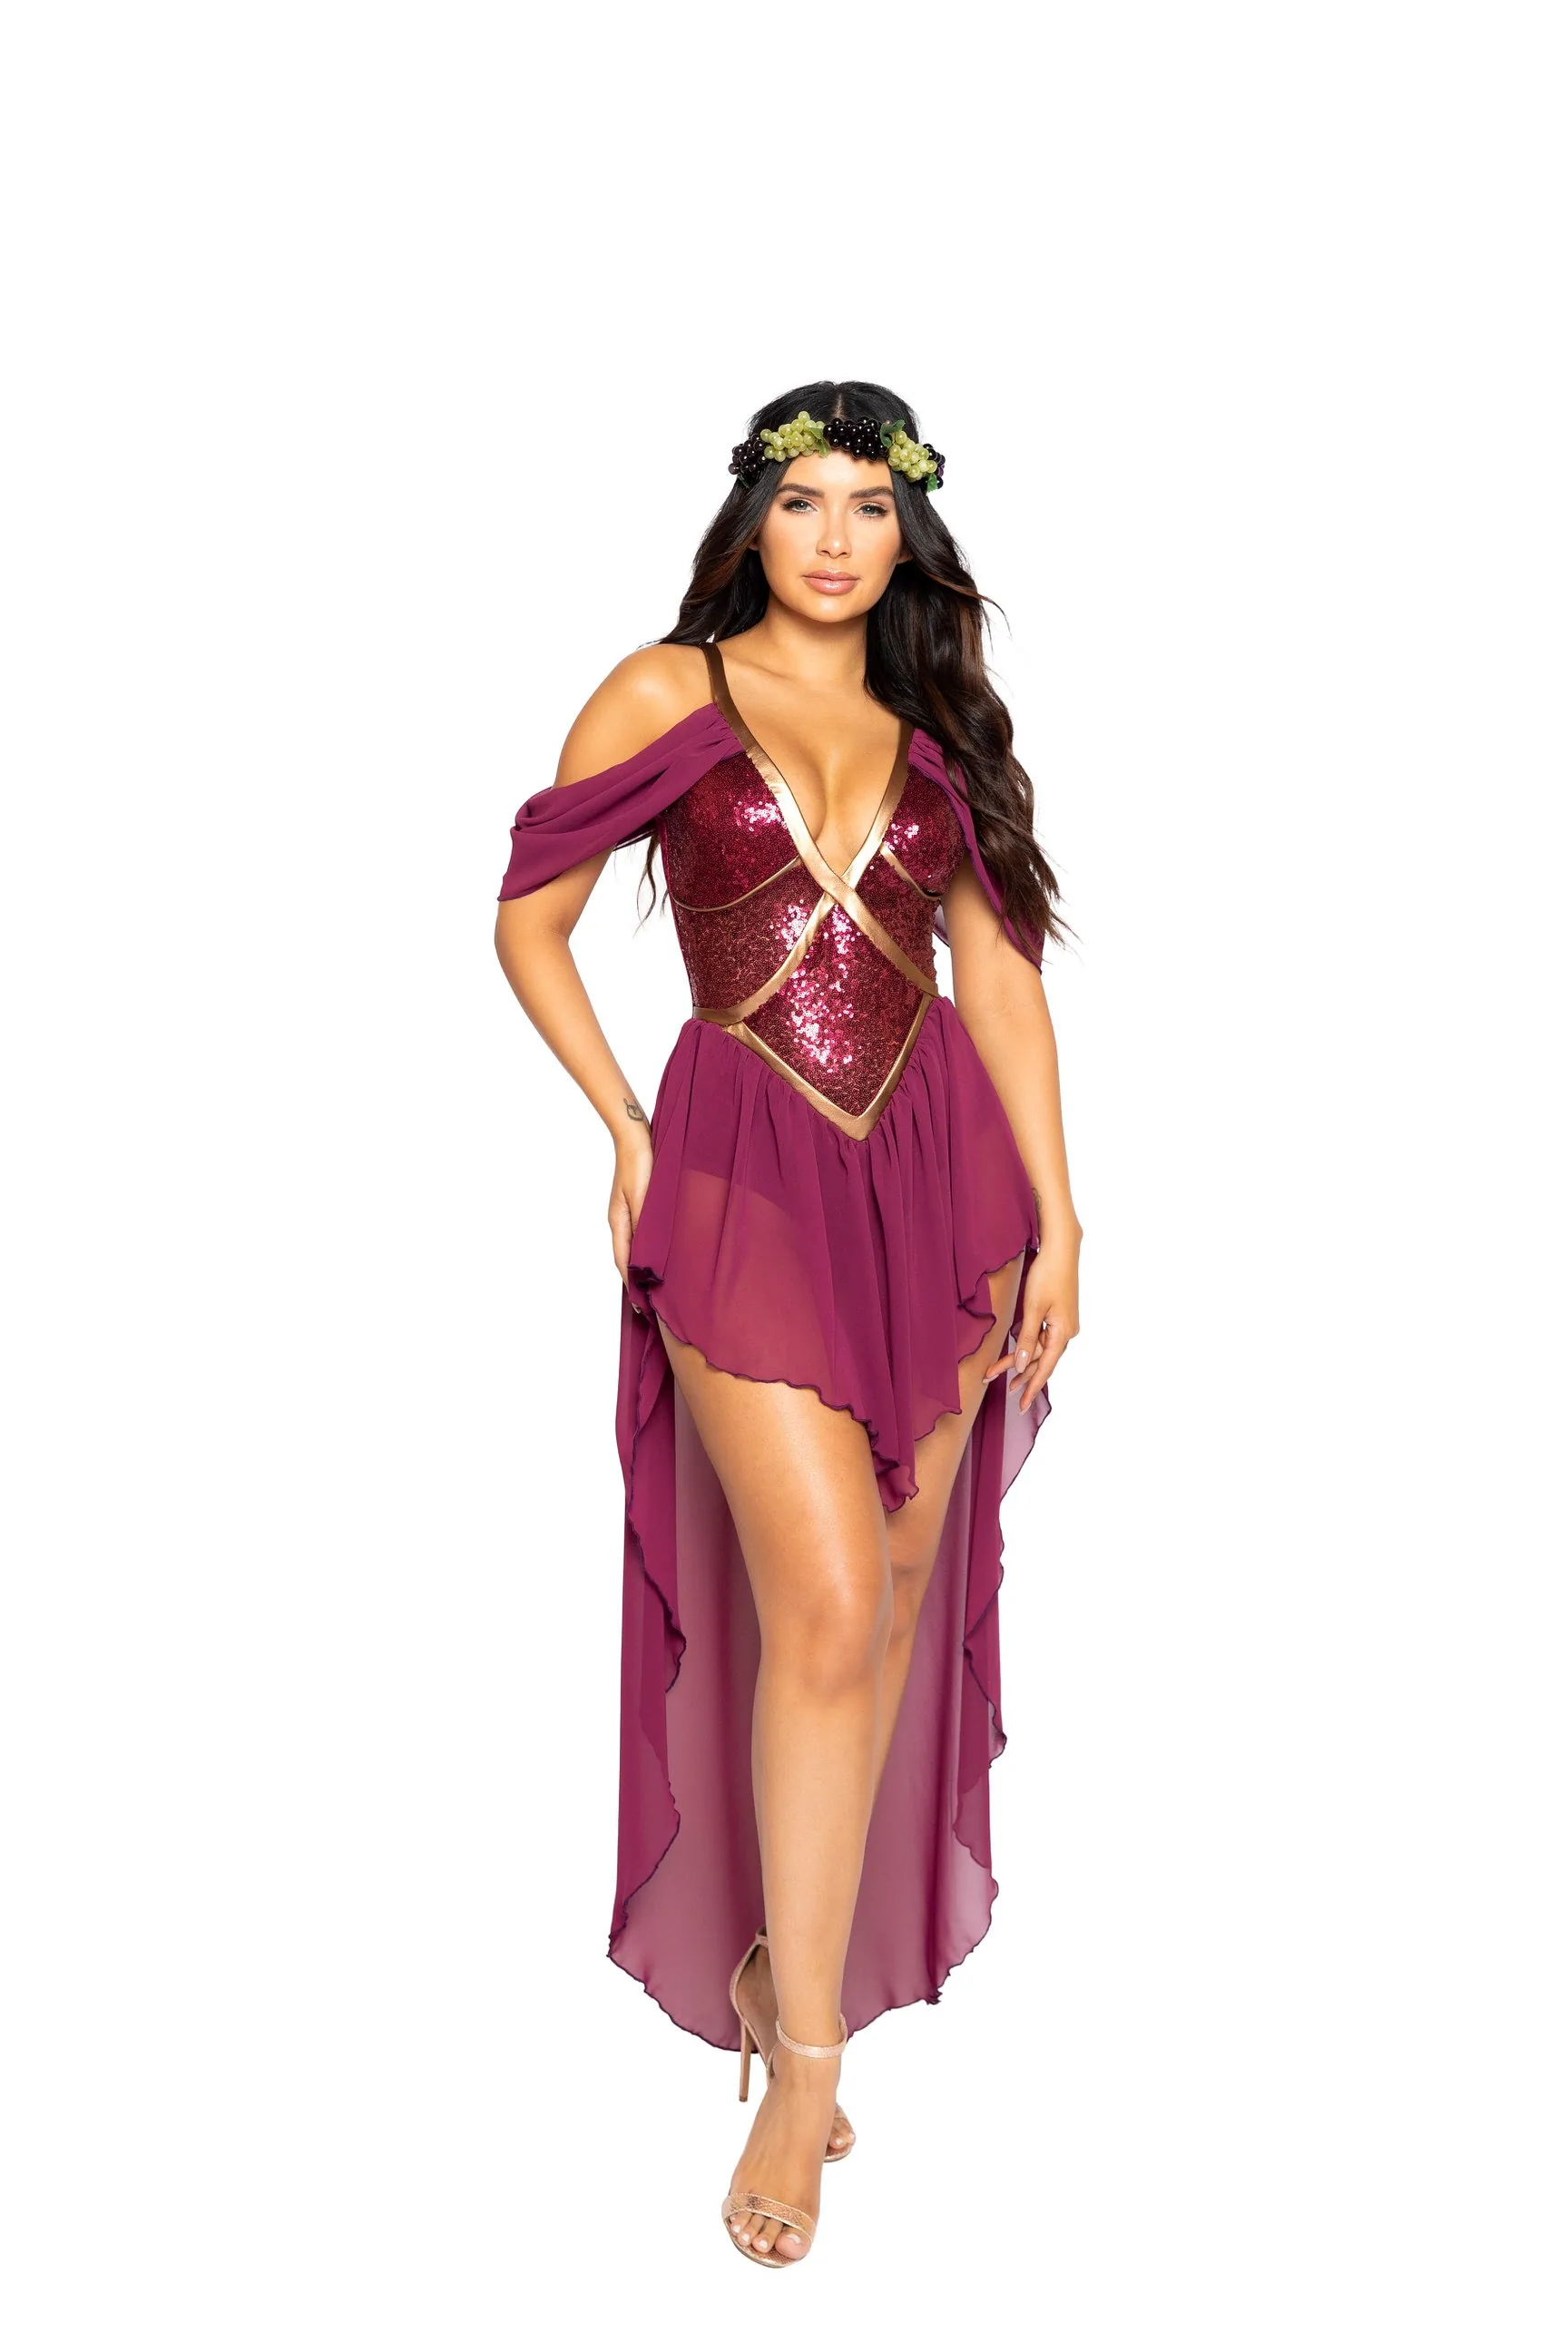 2PC Wine Greek Goddess Costume